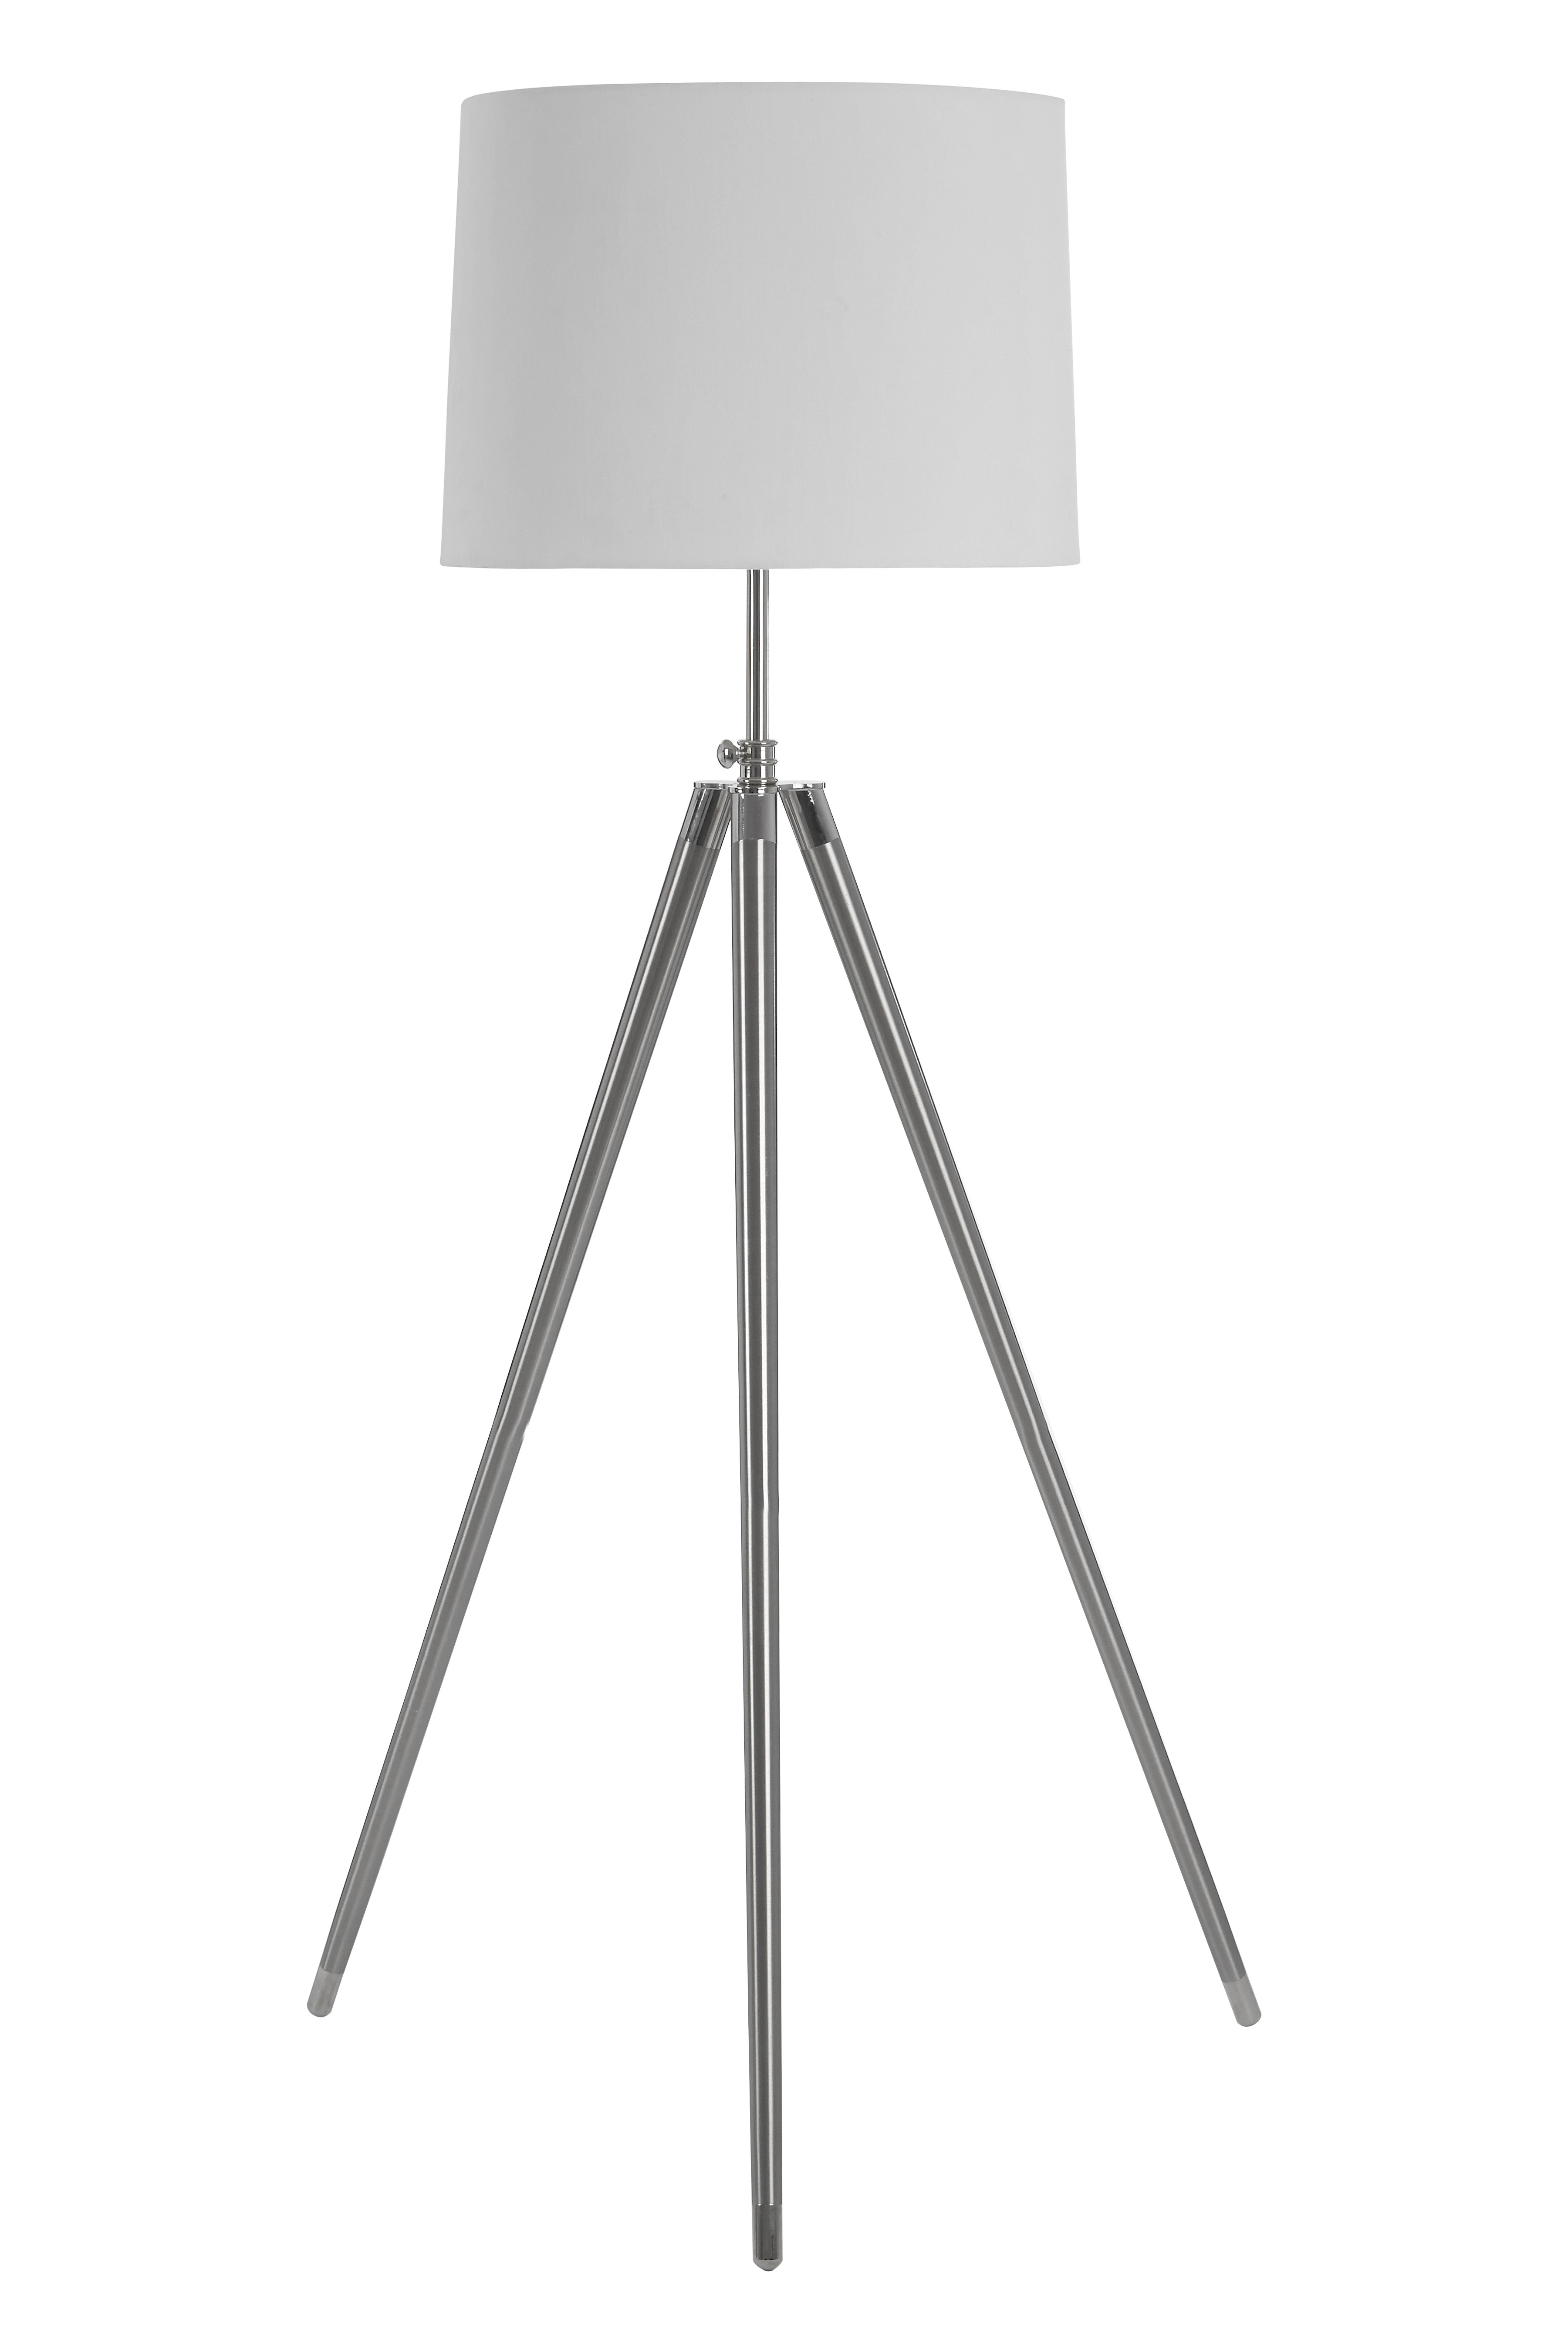 Unique Floor Lamp With Uk Plug inside proportions 3600 X 5400